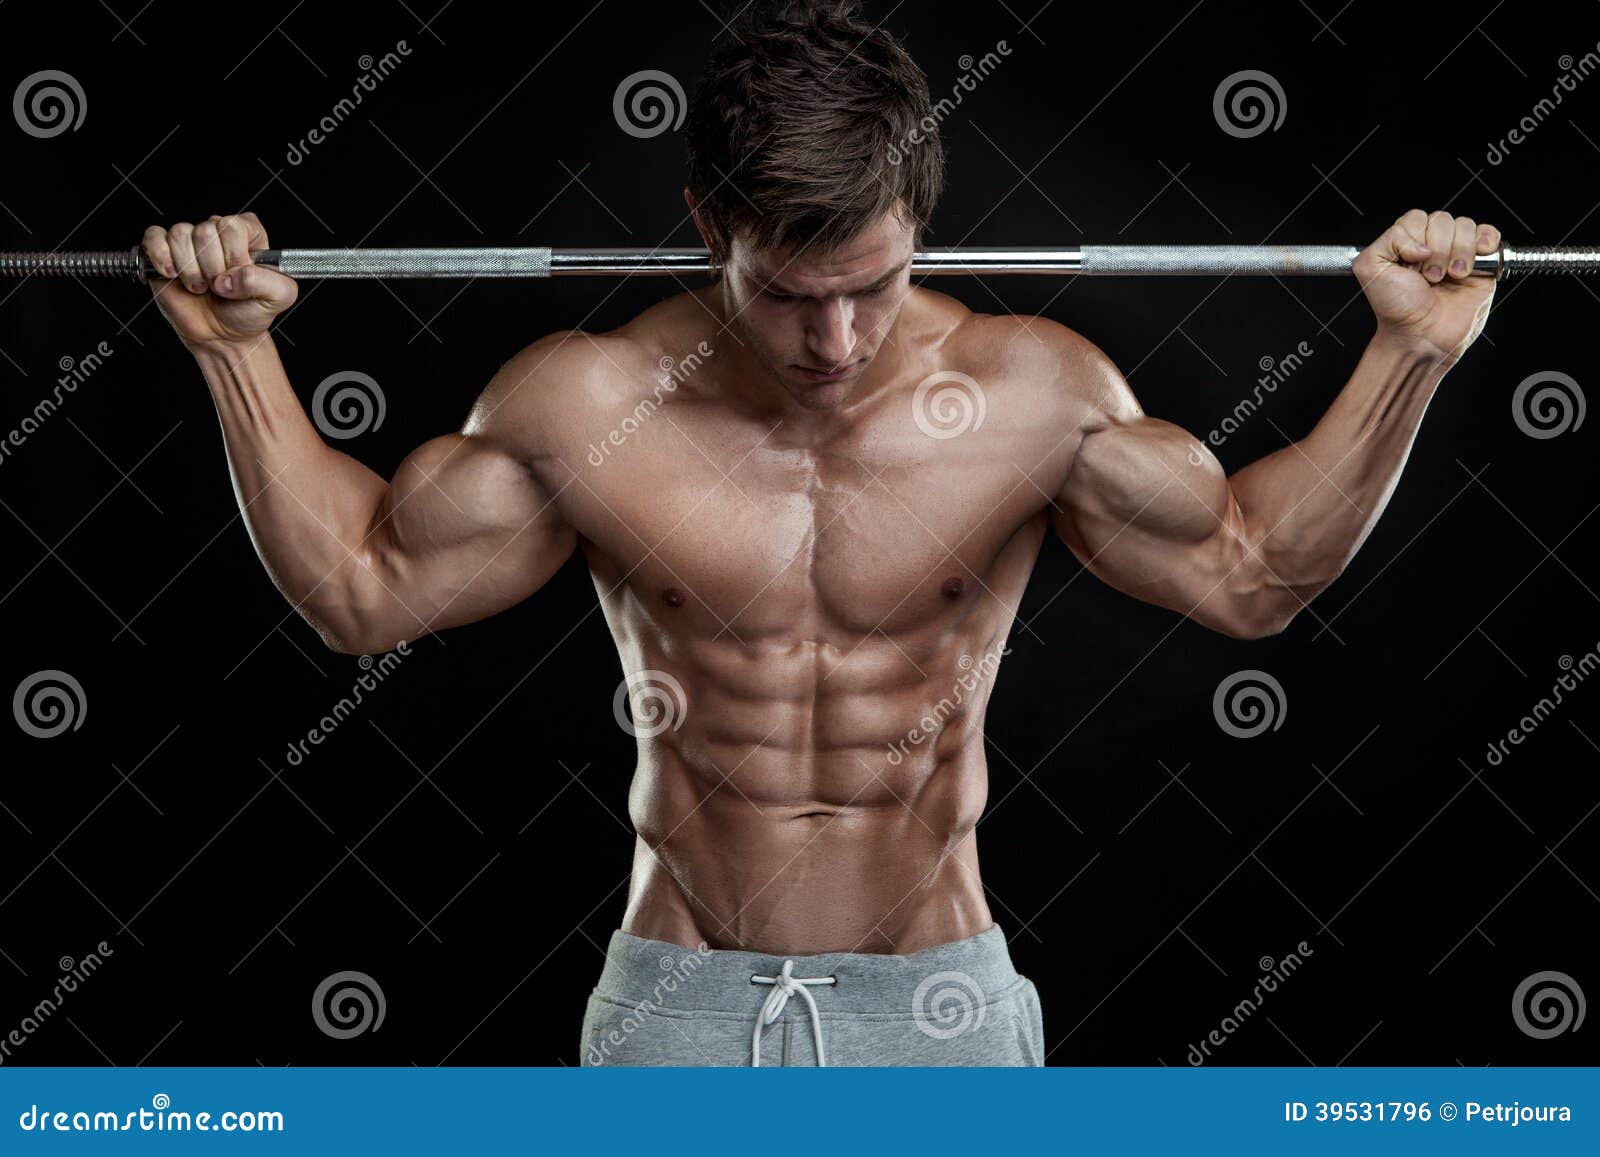 muscular bodybuilder guy doing exercises with dumbbell